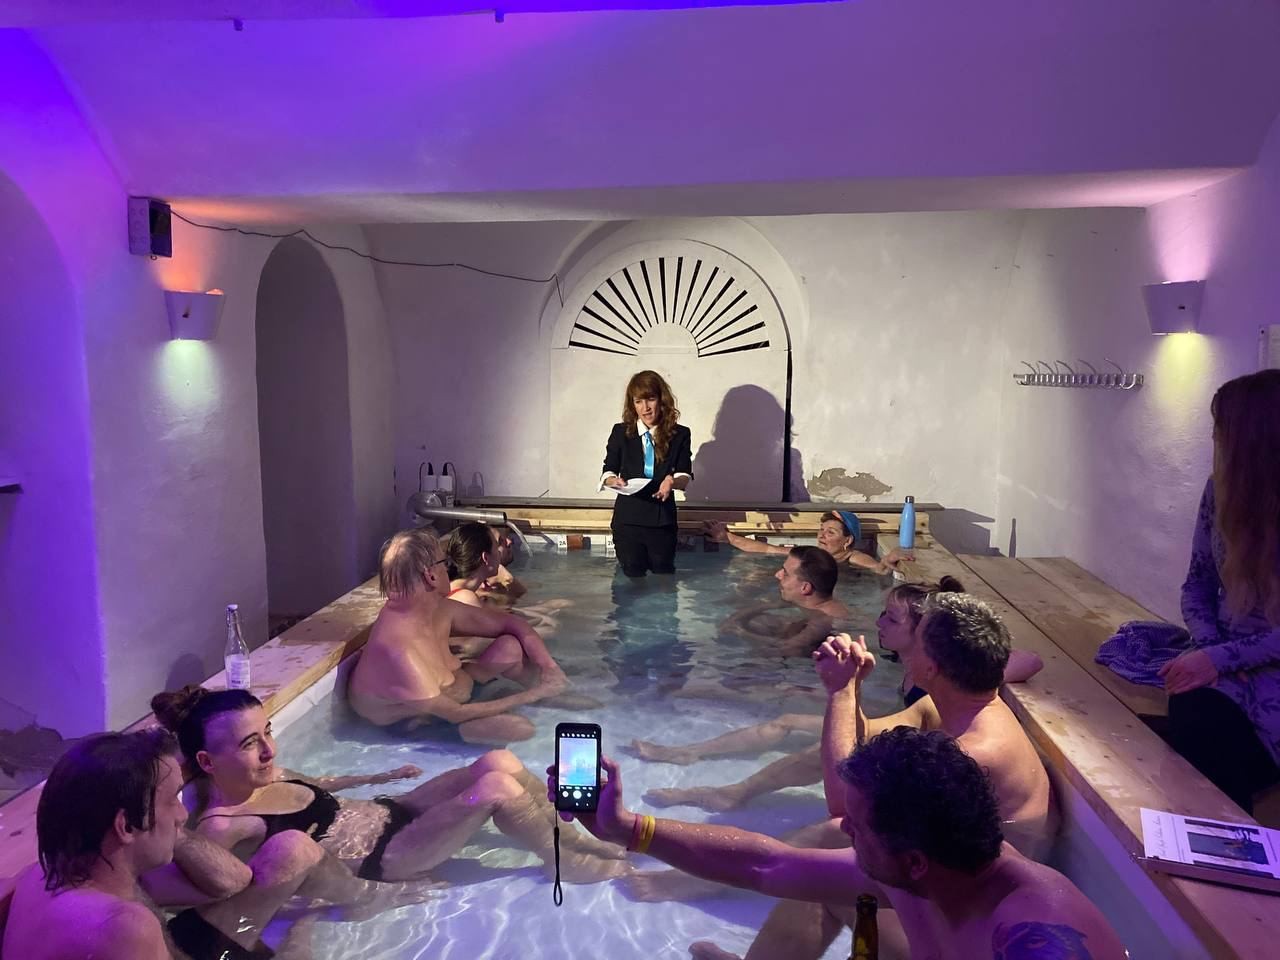 A woman giving a talk inside a pool